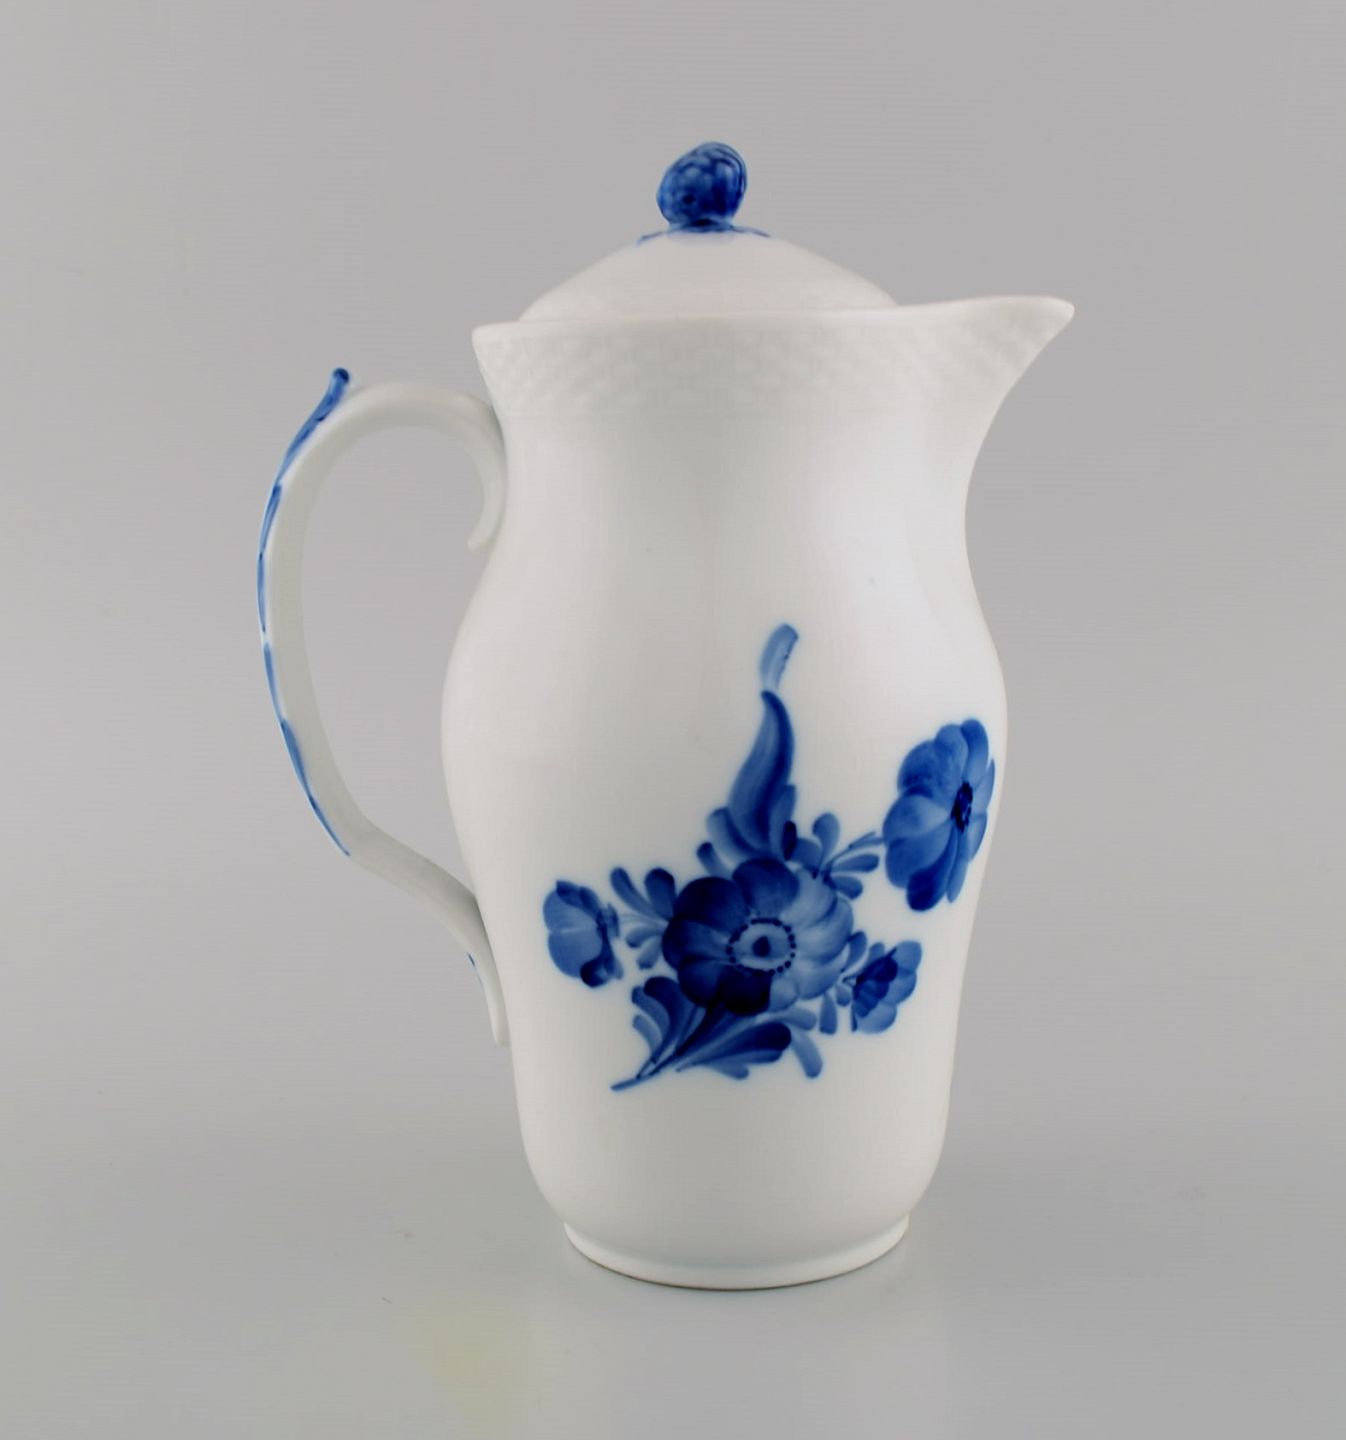  Royal Copenhagen Blue Flower Braided lidded jug